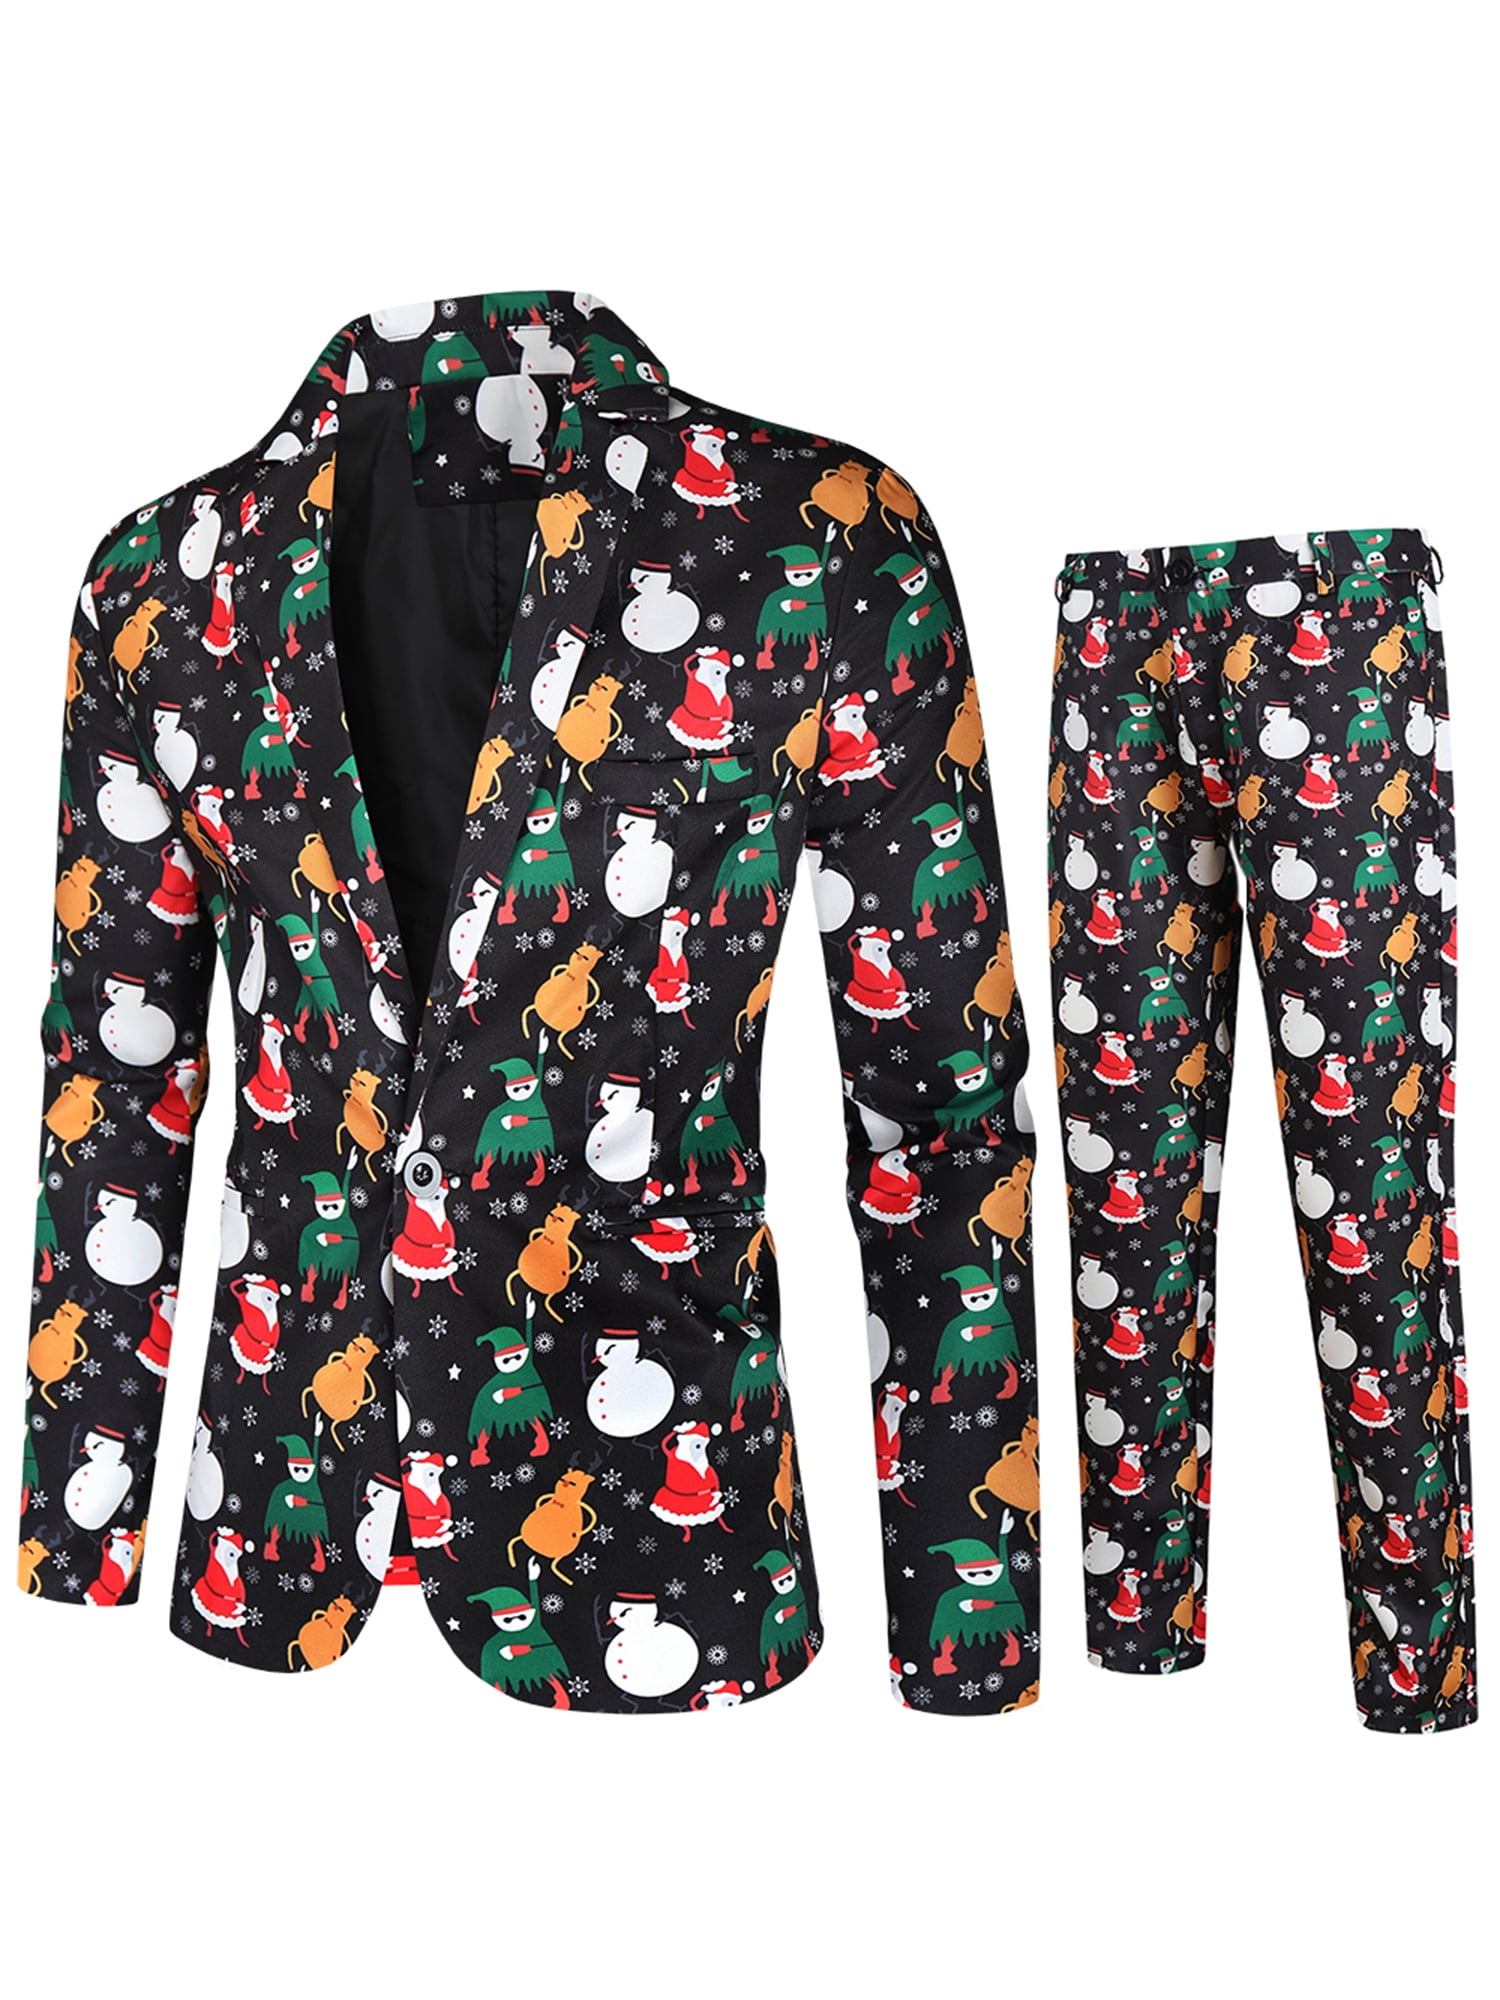 Licupiee Tuxedo Suits for Men 2 Piece Regular Fit Suit Snowfalke Santa ...